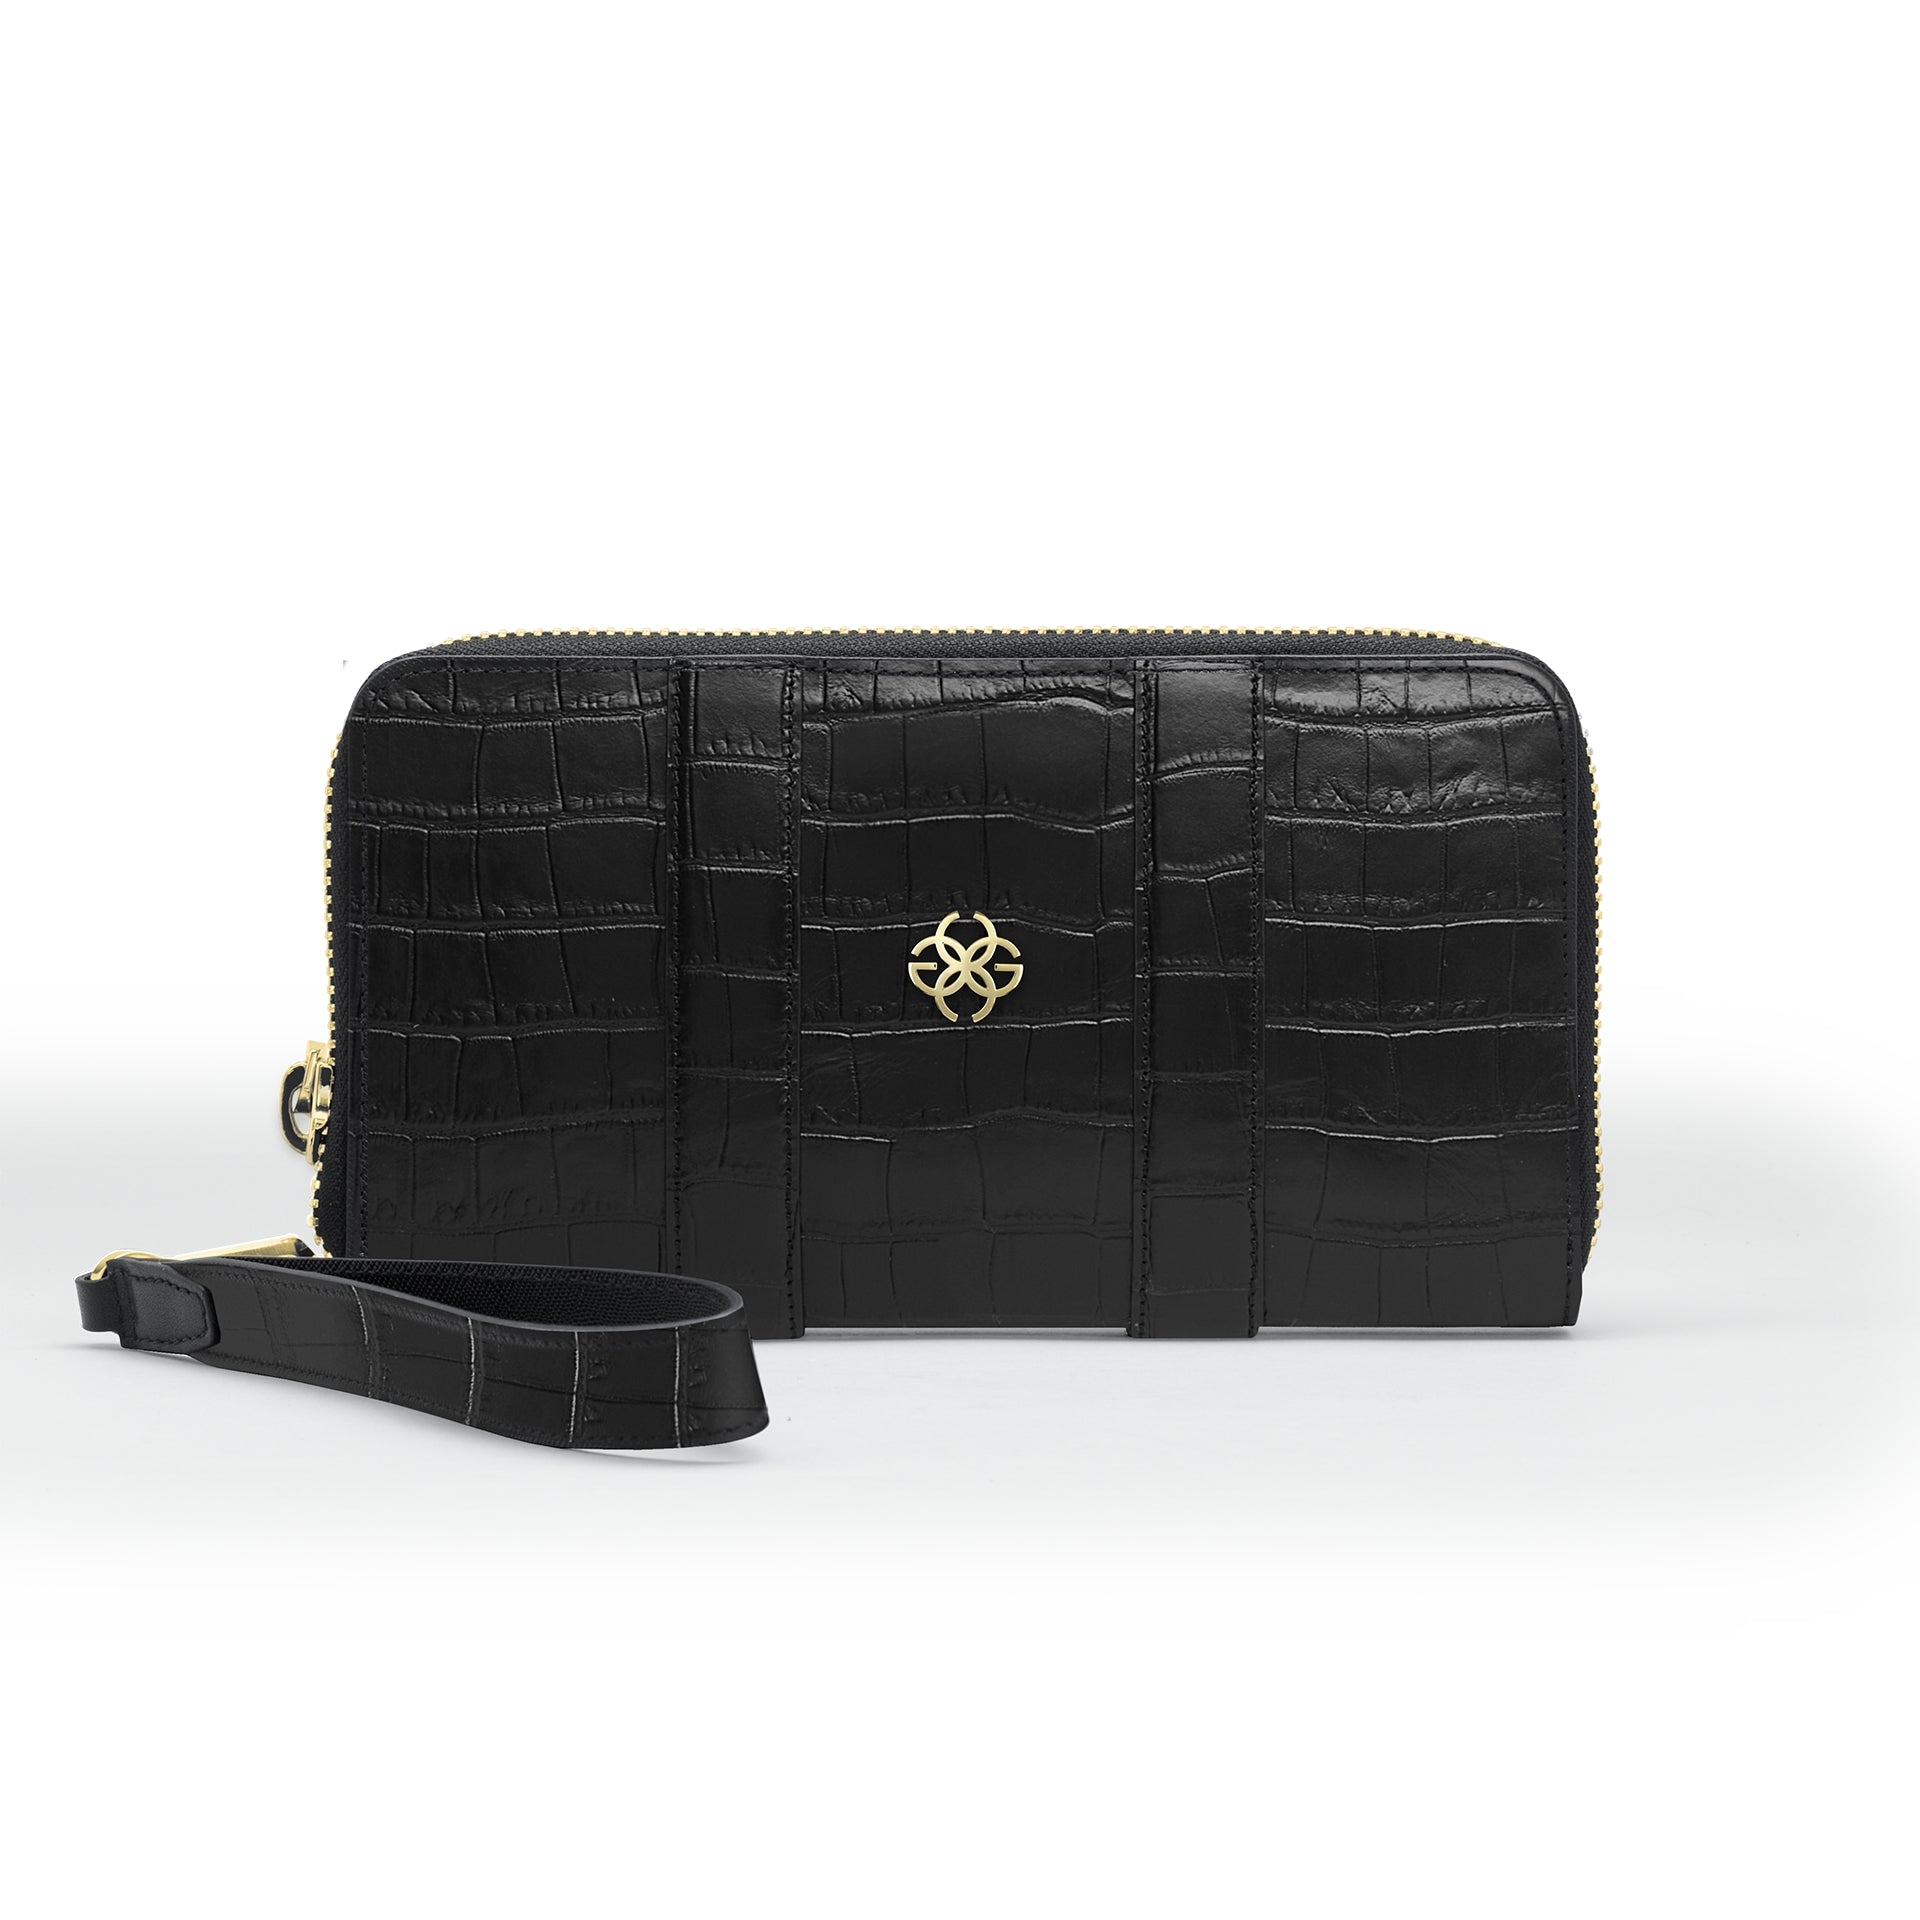 Golden Concept - Leather Accessories - Zippy Wallet (Croco Embossed)